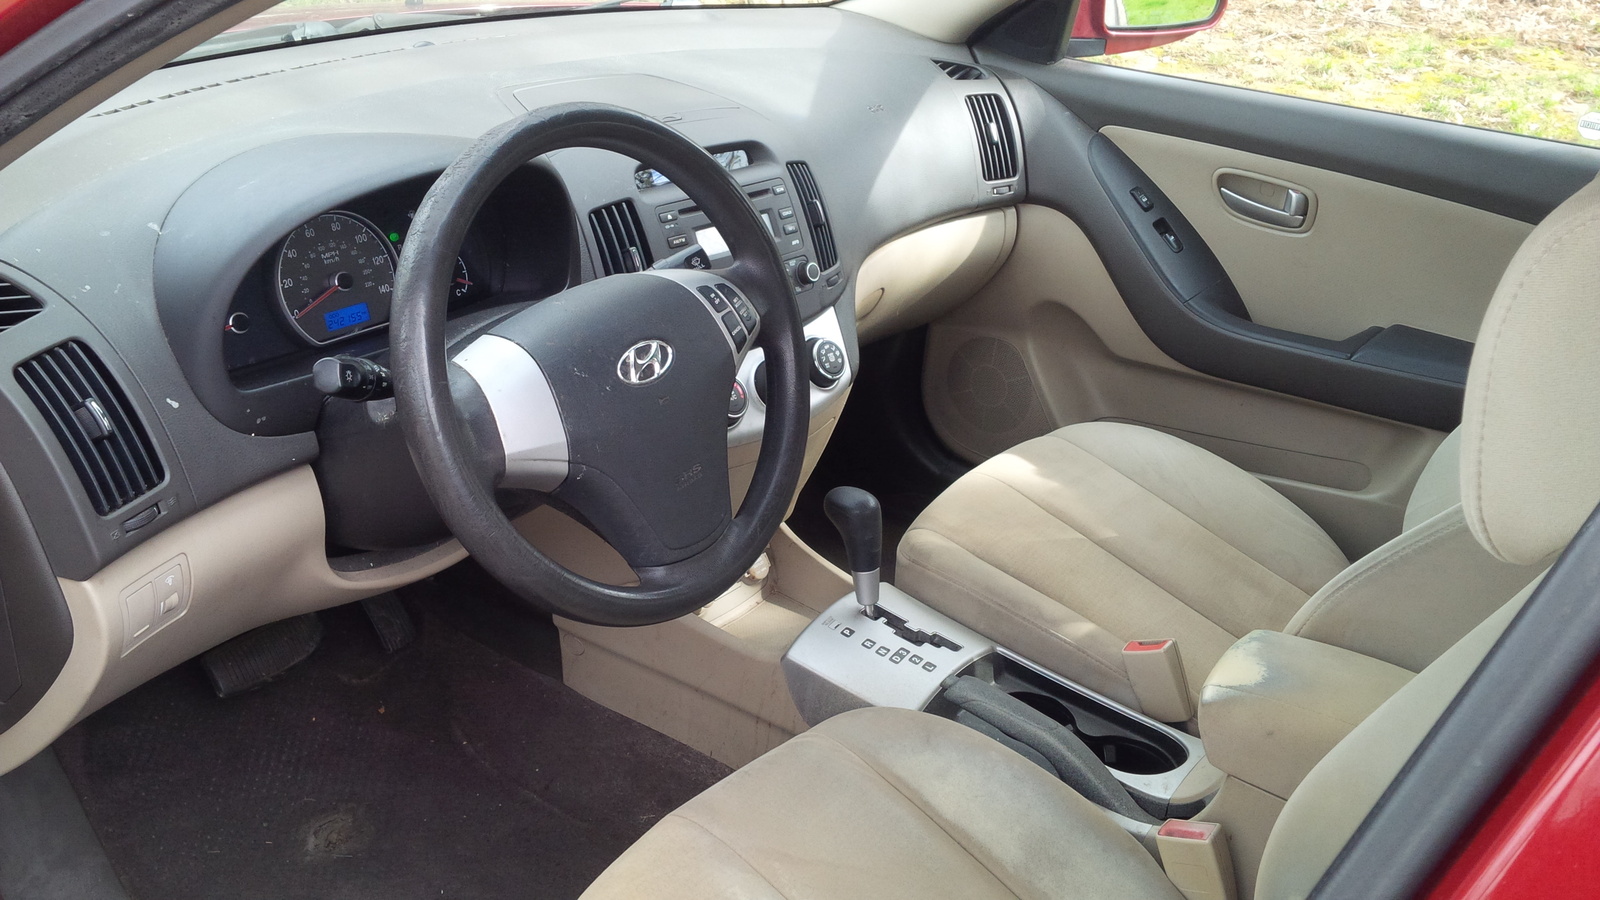 2008 Hyundai Elantra Test Drive Review